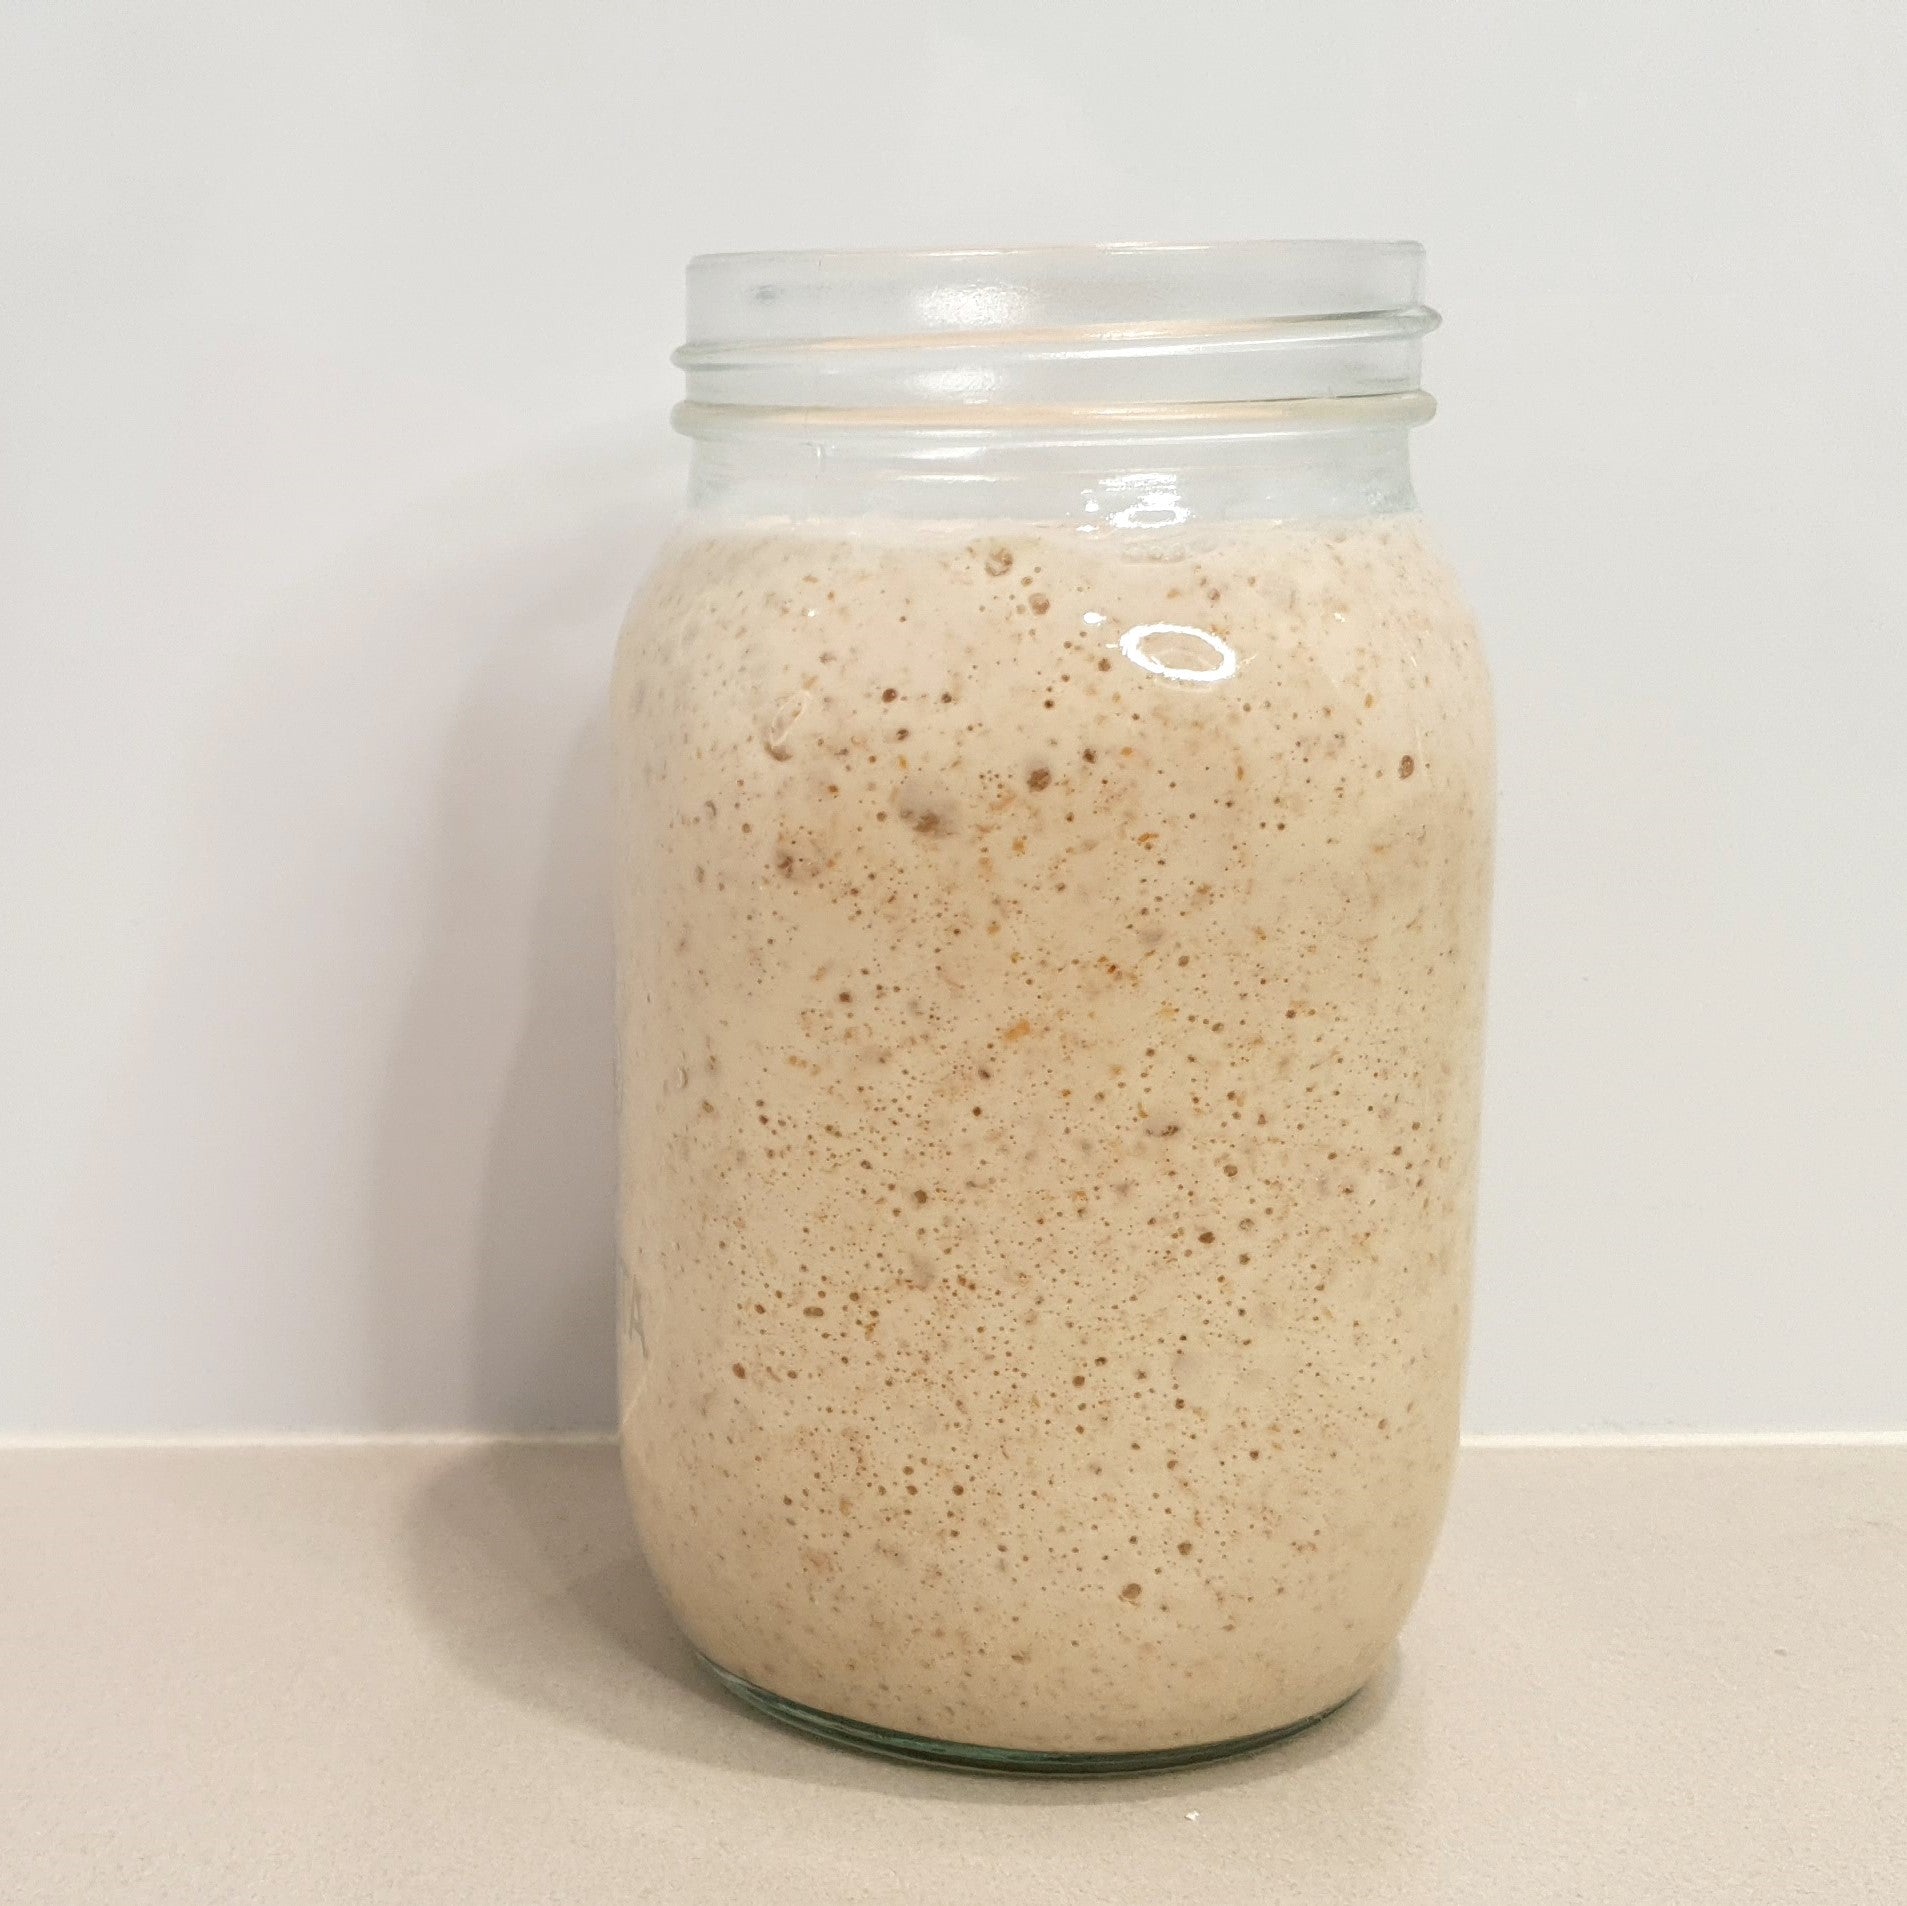 Sourdough starter in a glass jar